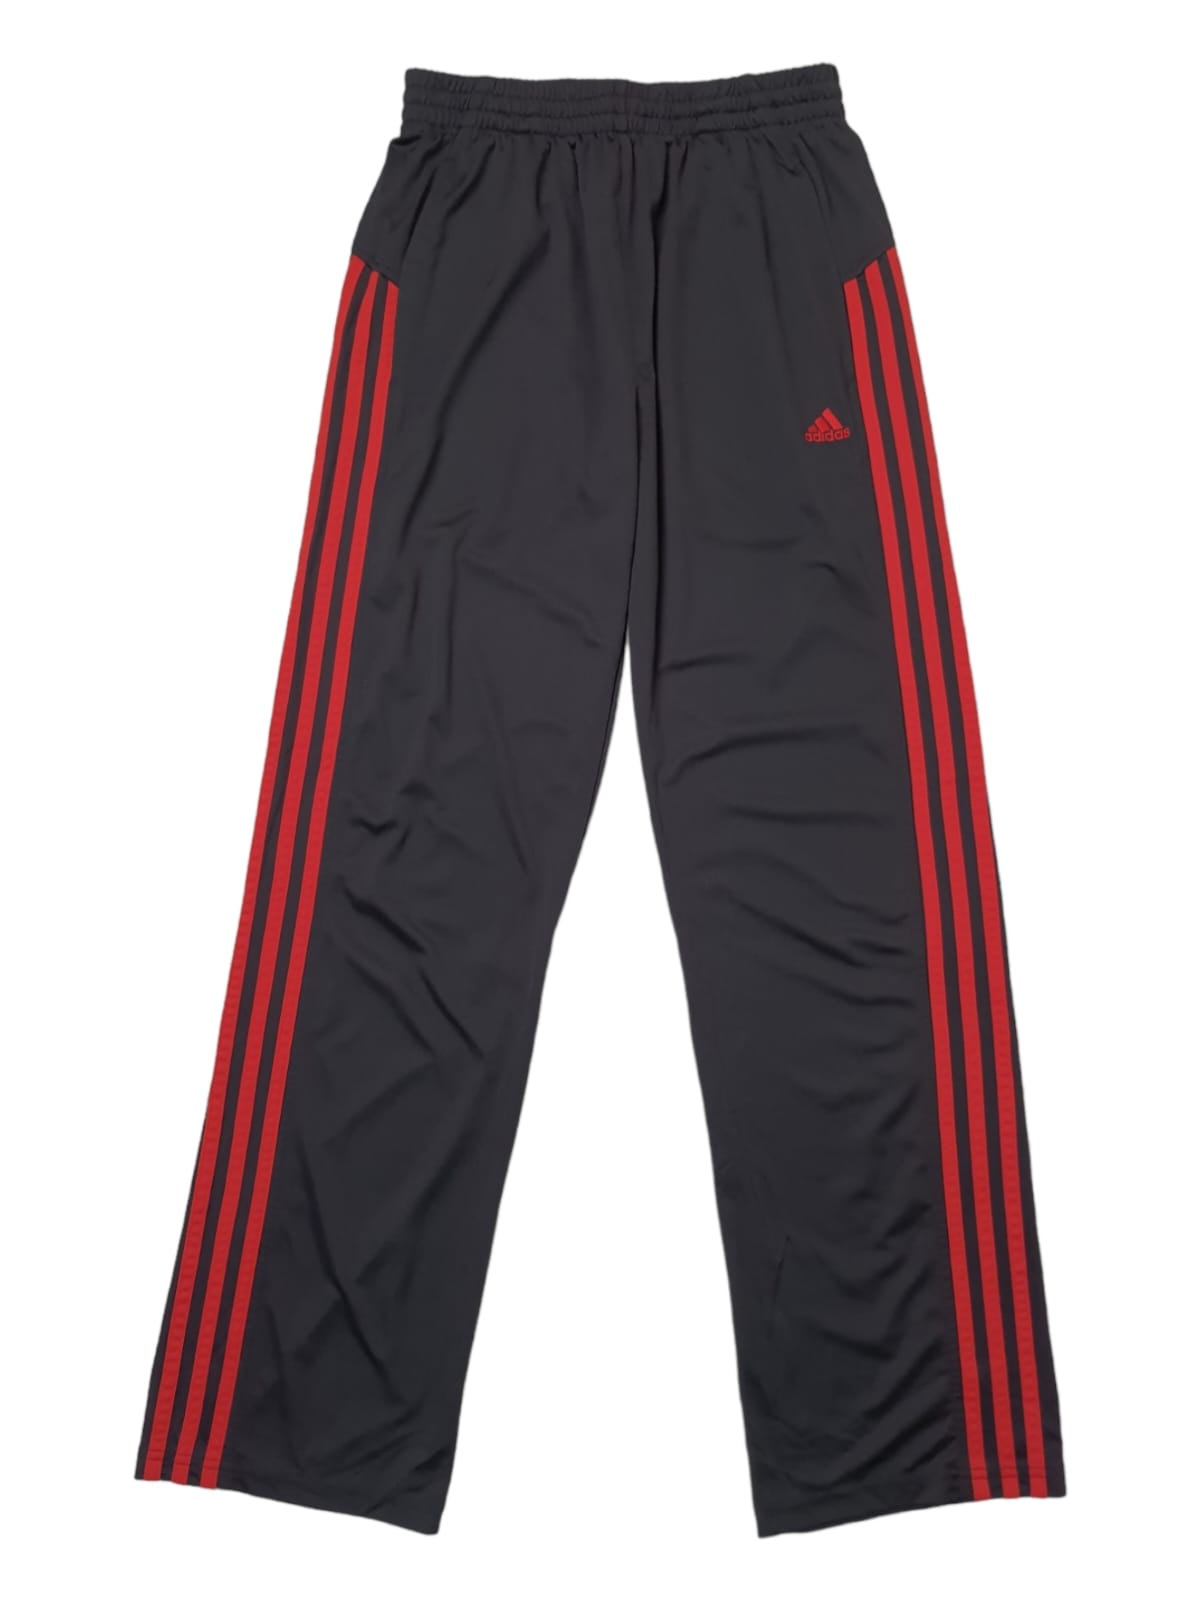 Adidas Red/Black Men's Jogger Pant ( L )